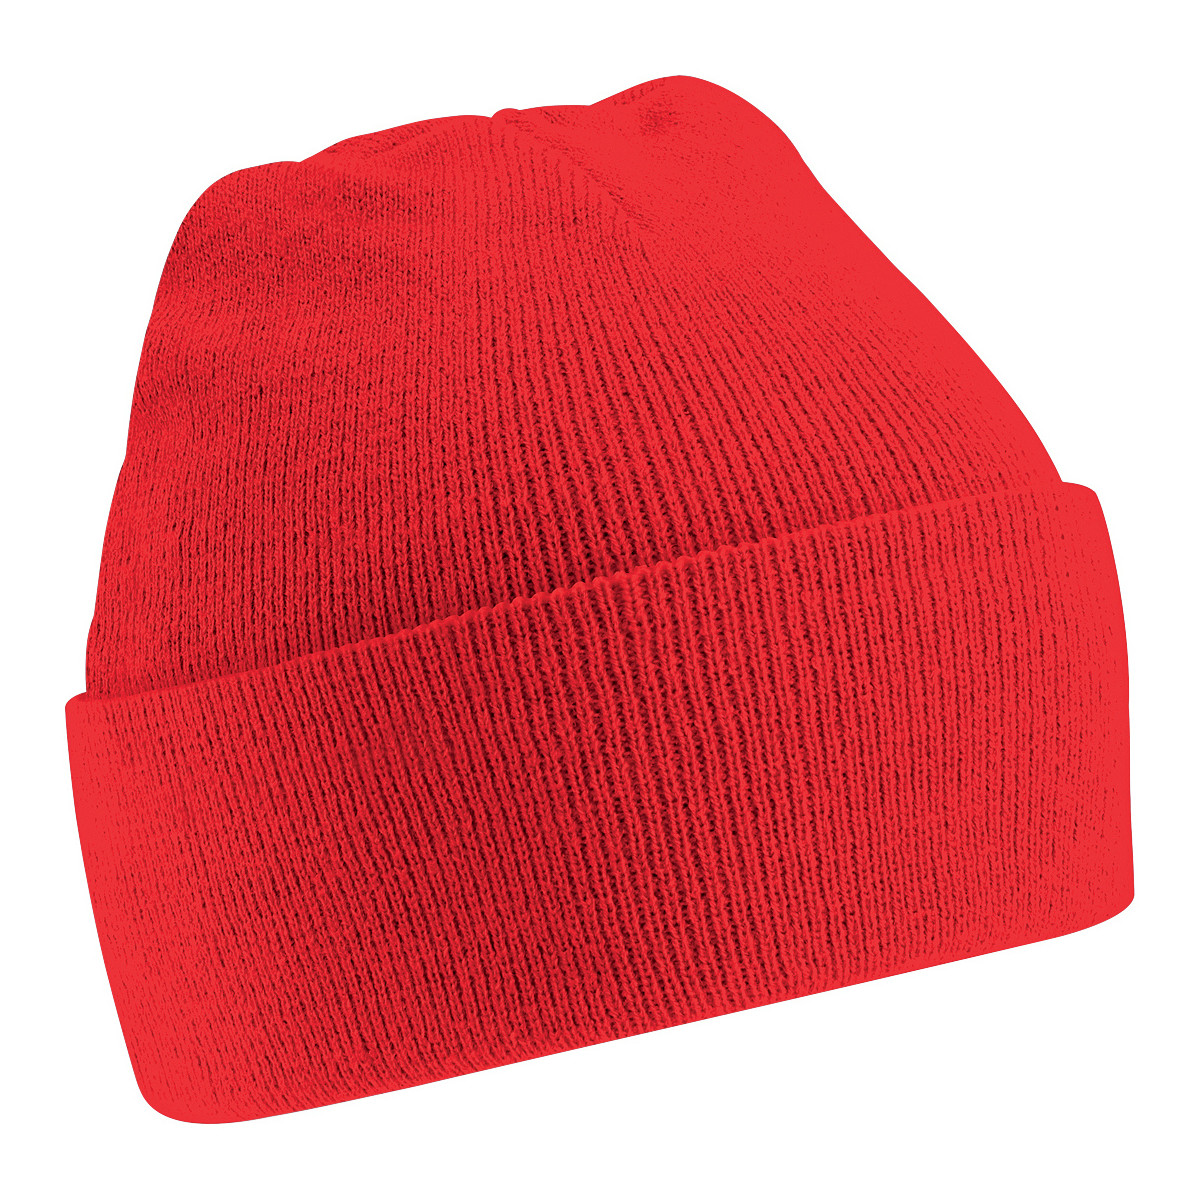 Accesorios textil Gorro Beechfield Soft Feel Rojo